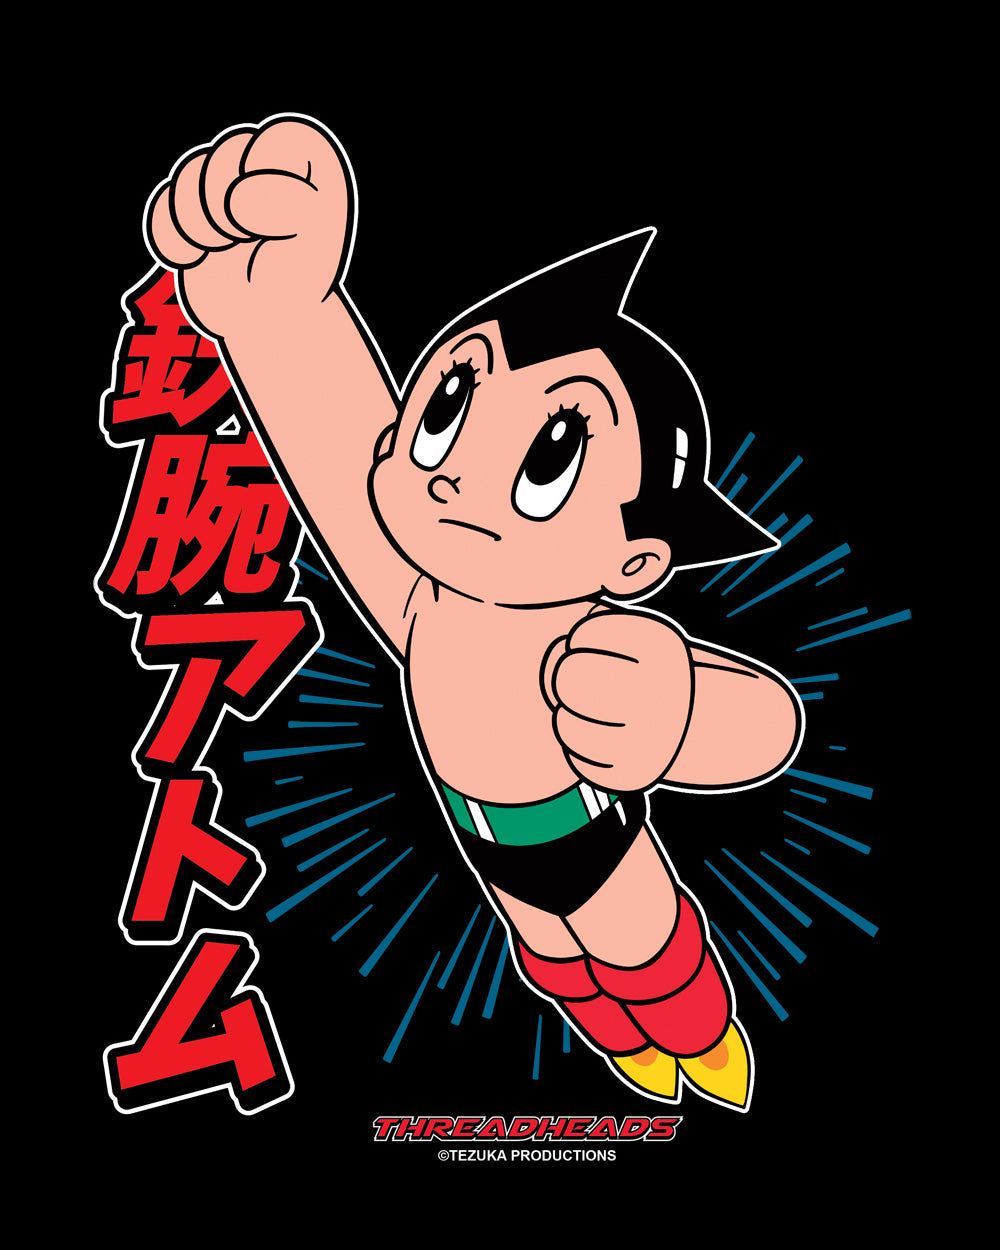 Astro Boy Flight Classic Japanese Manga Anime Cartoon Comic Superhero Retro Vintage Officially Licensed Cotton T-Shirt